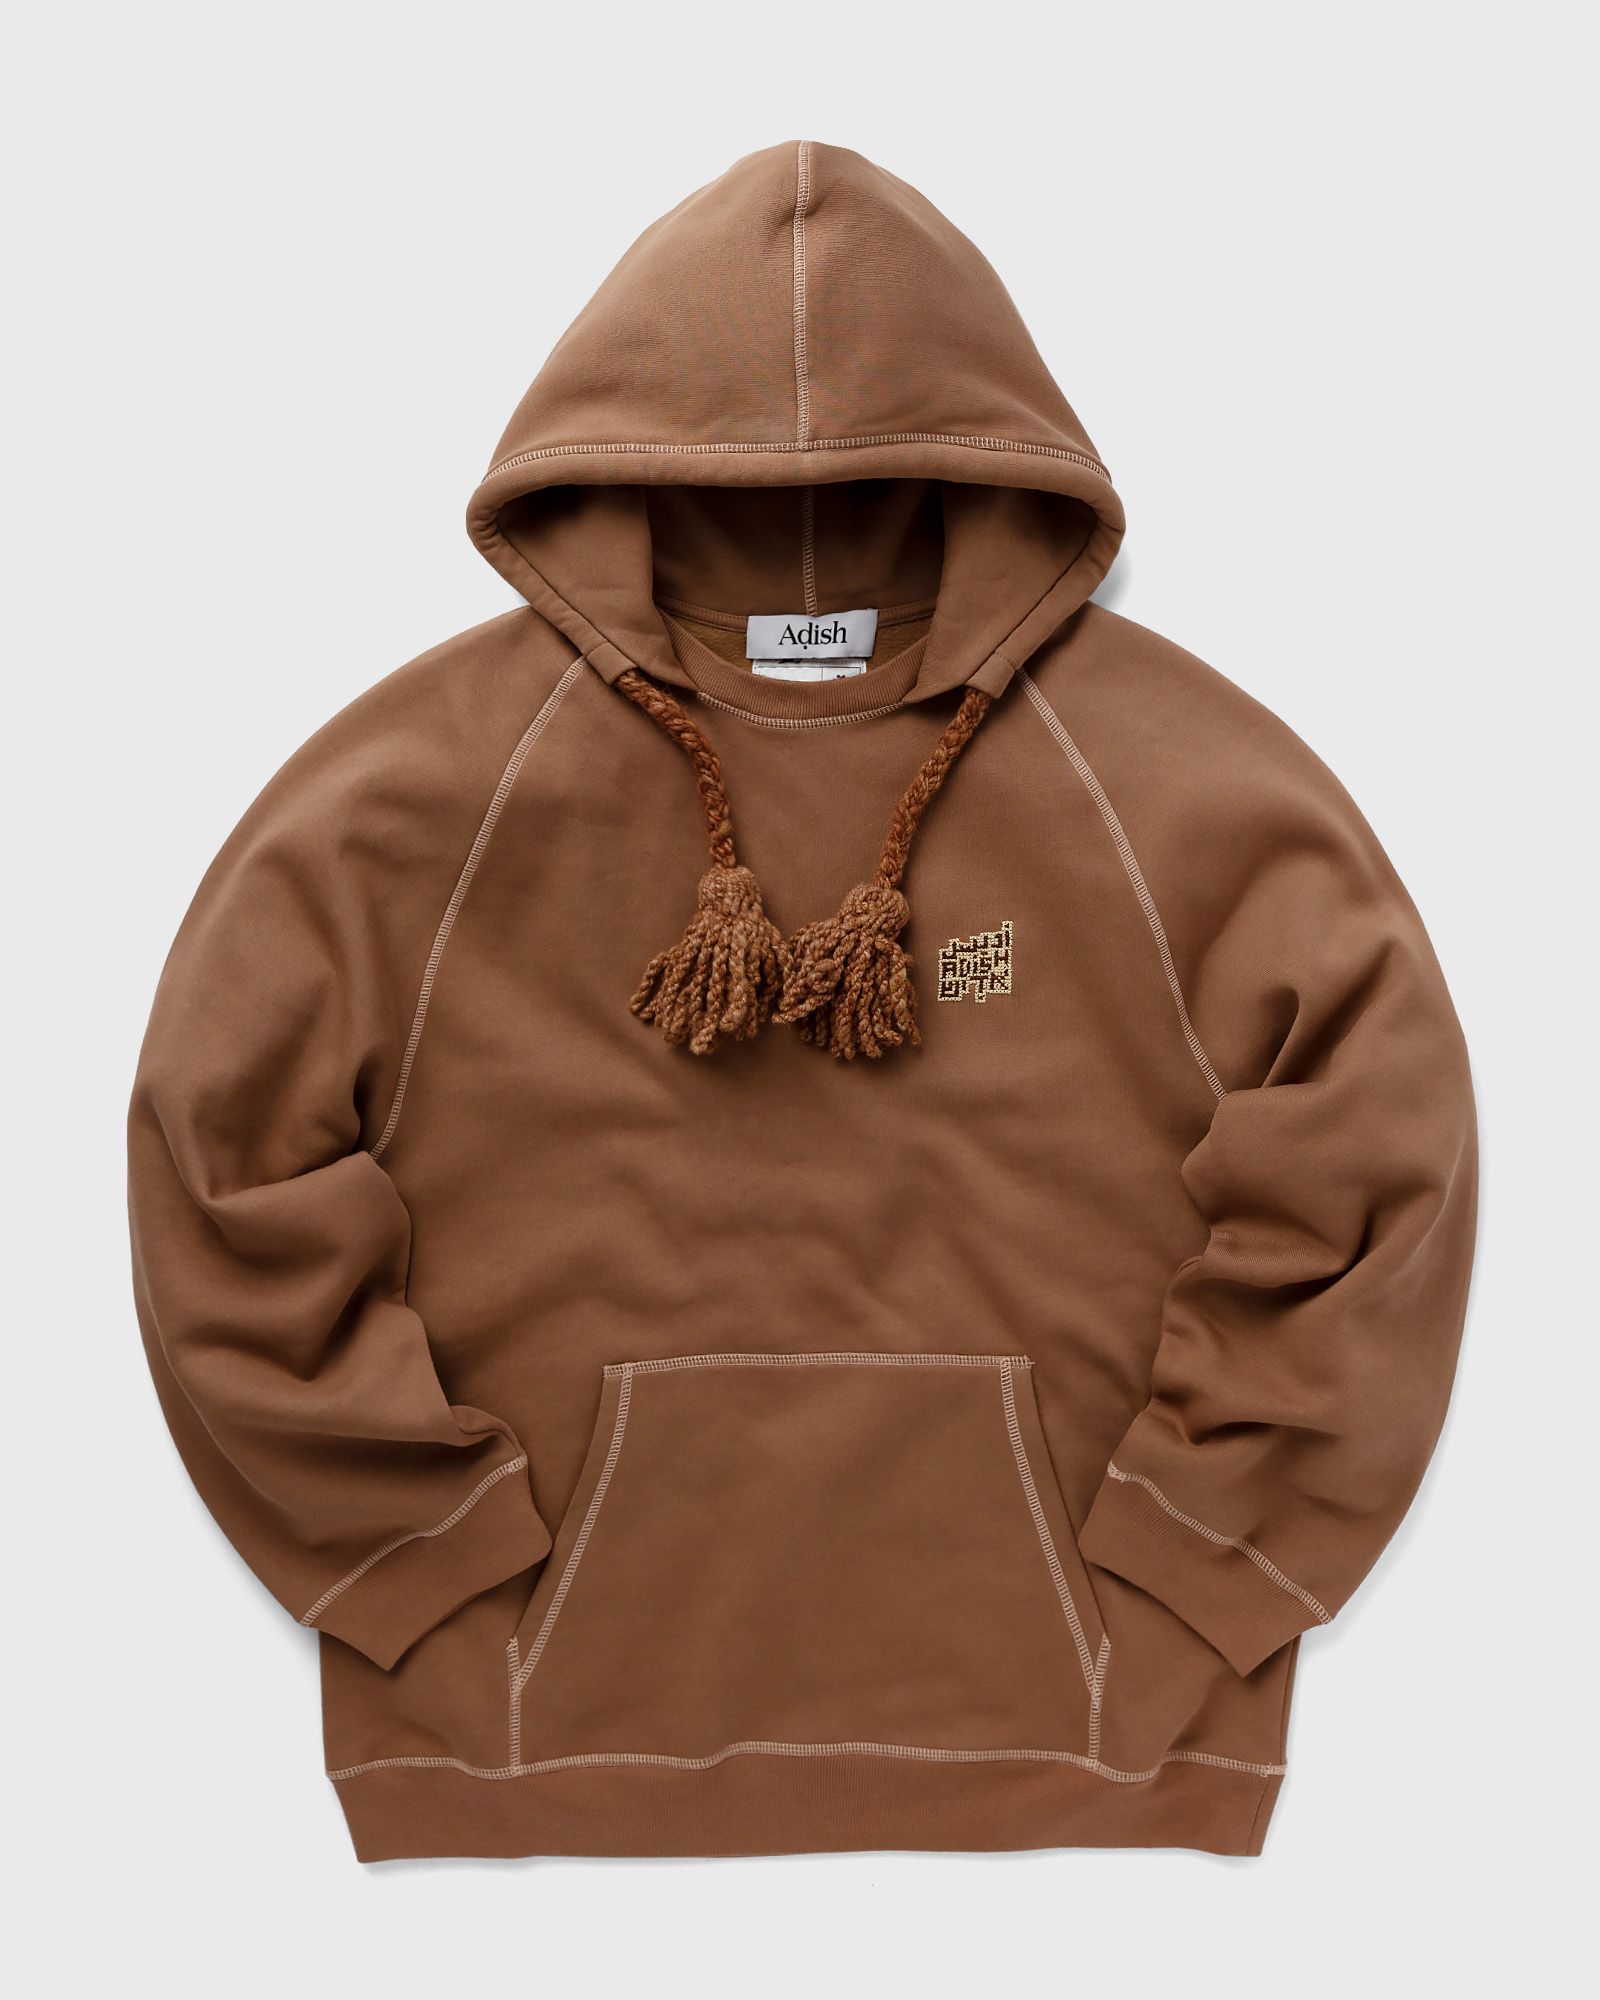 ADISH - tatreez logo contrast stitched lakiya hoodie men hoodies brown in größe:xxl